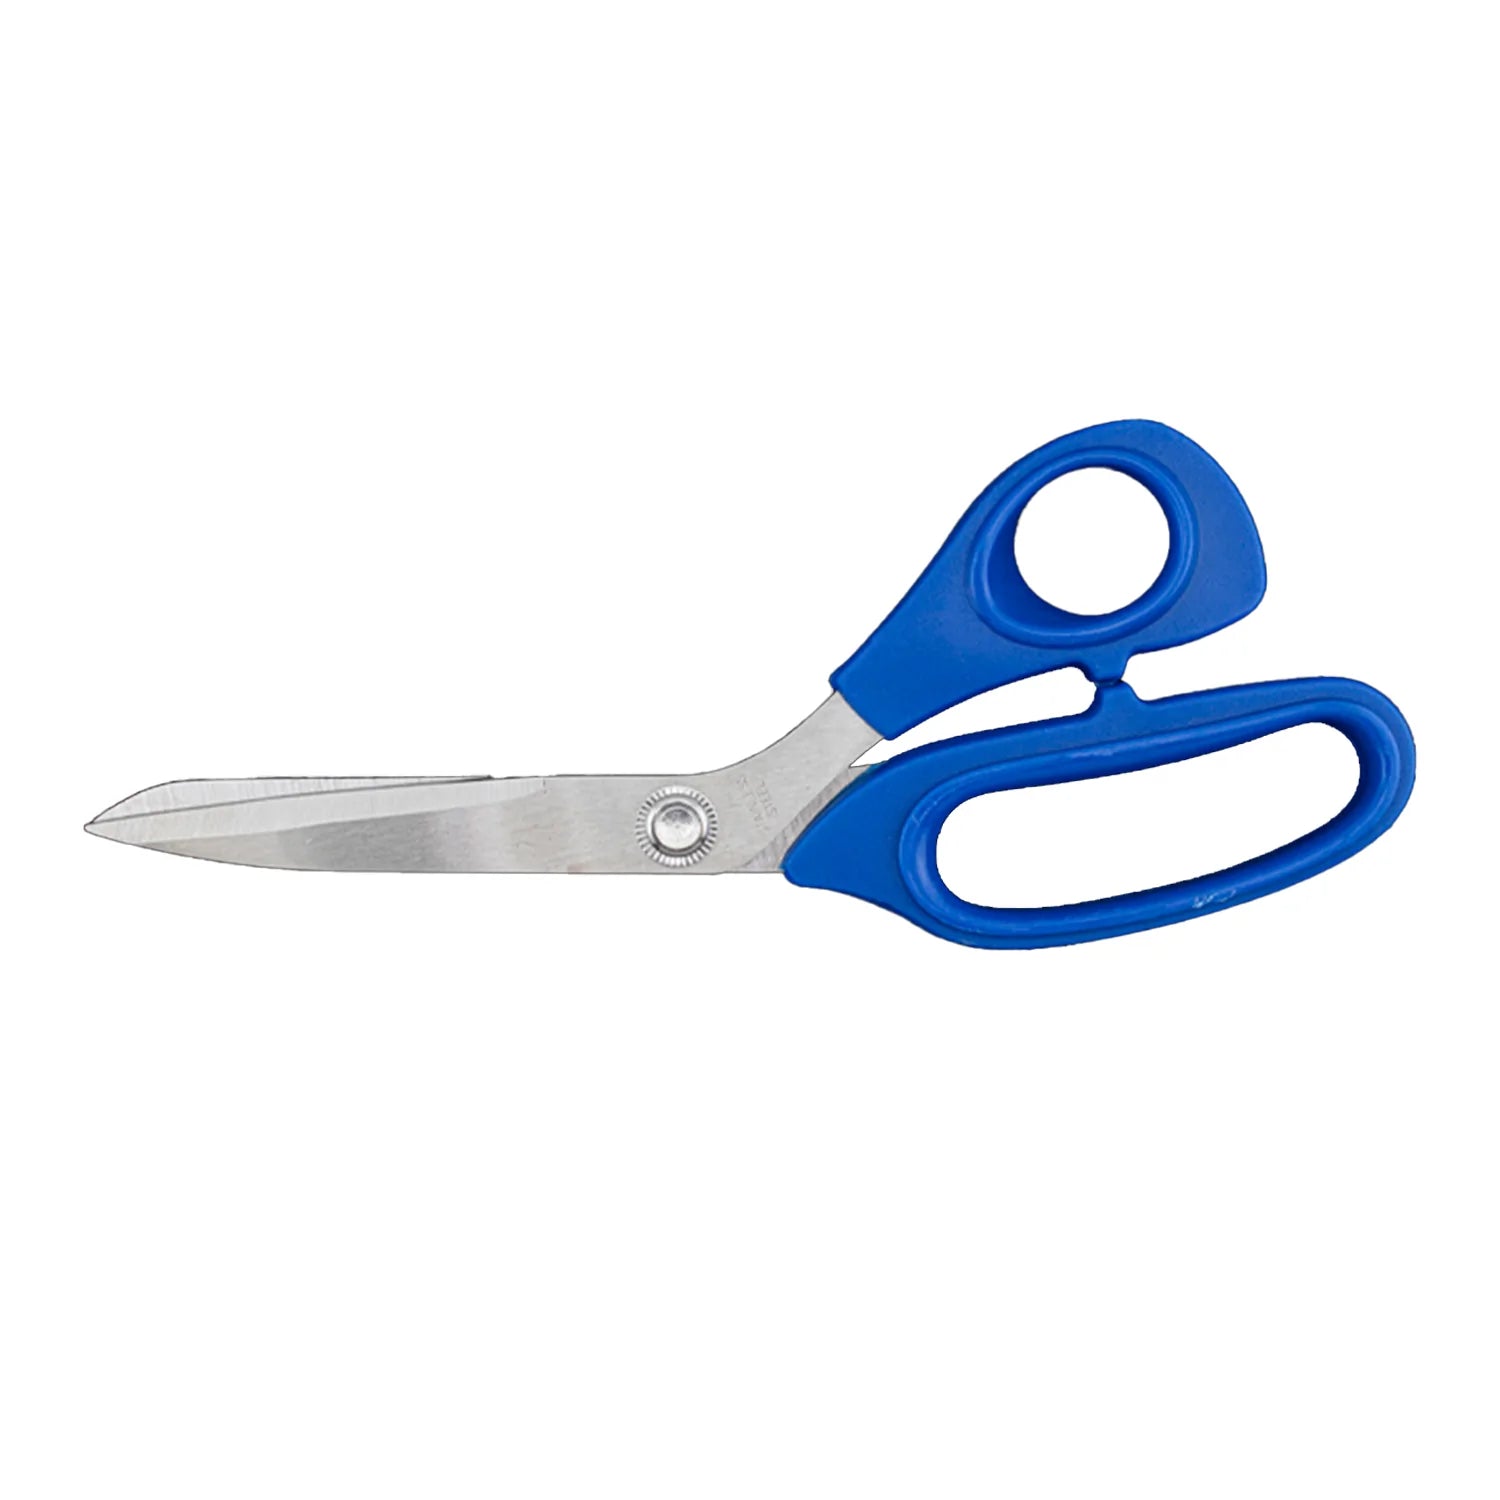 Truper scissors for industrial tailor 12 